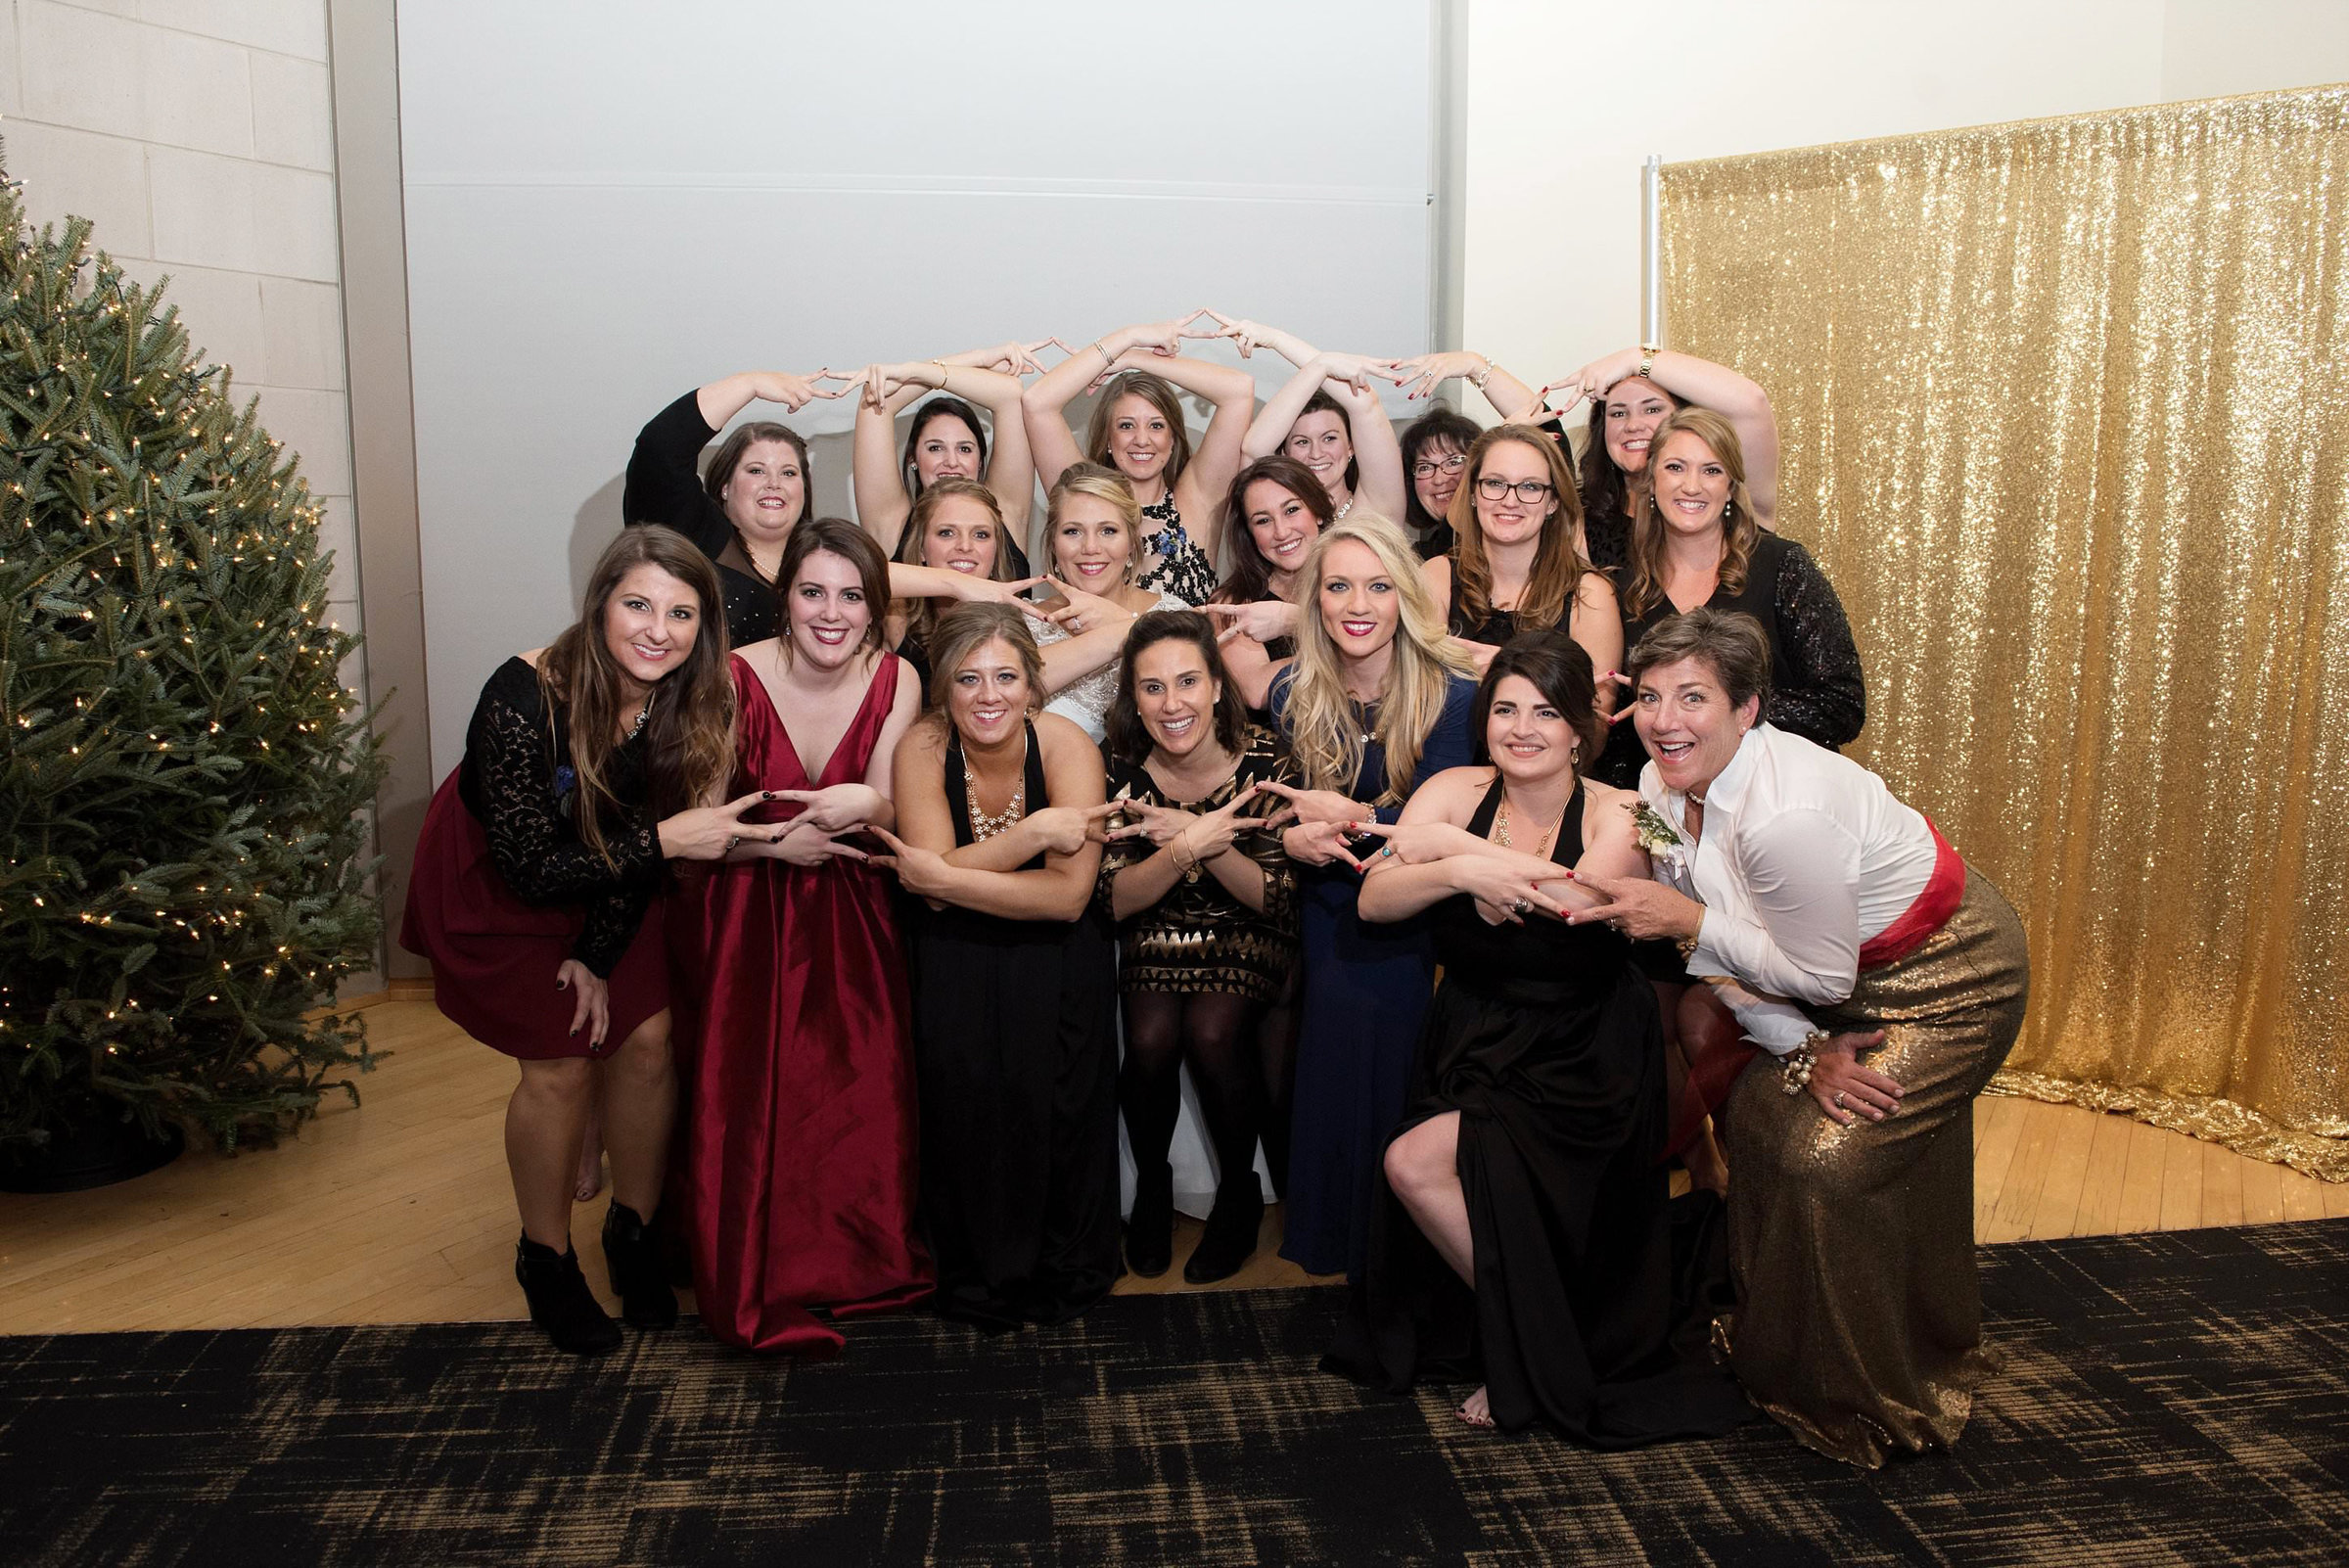 Group photo of Alpha Delta Pi generation sorority photo at brides wedding reception